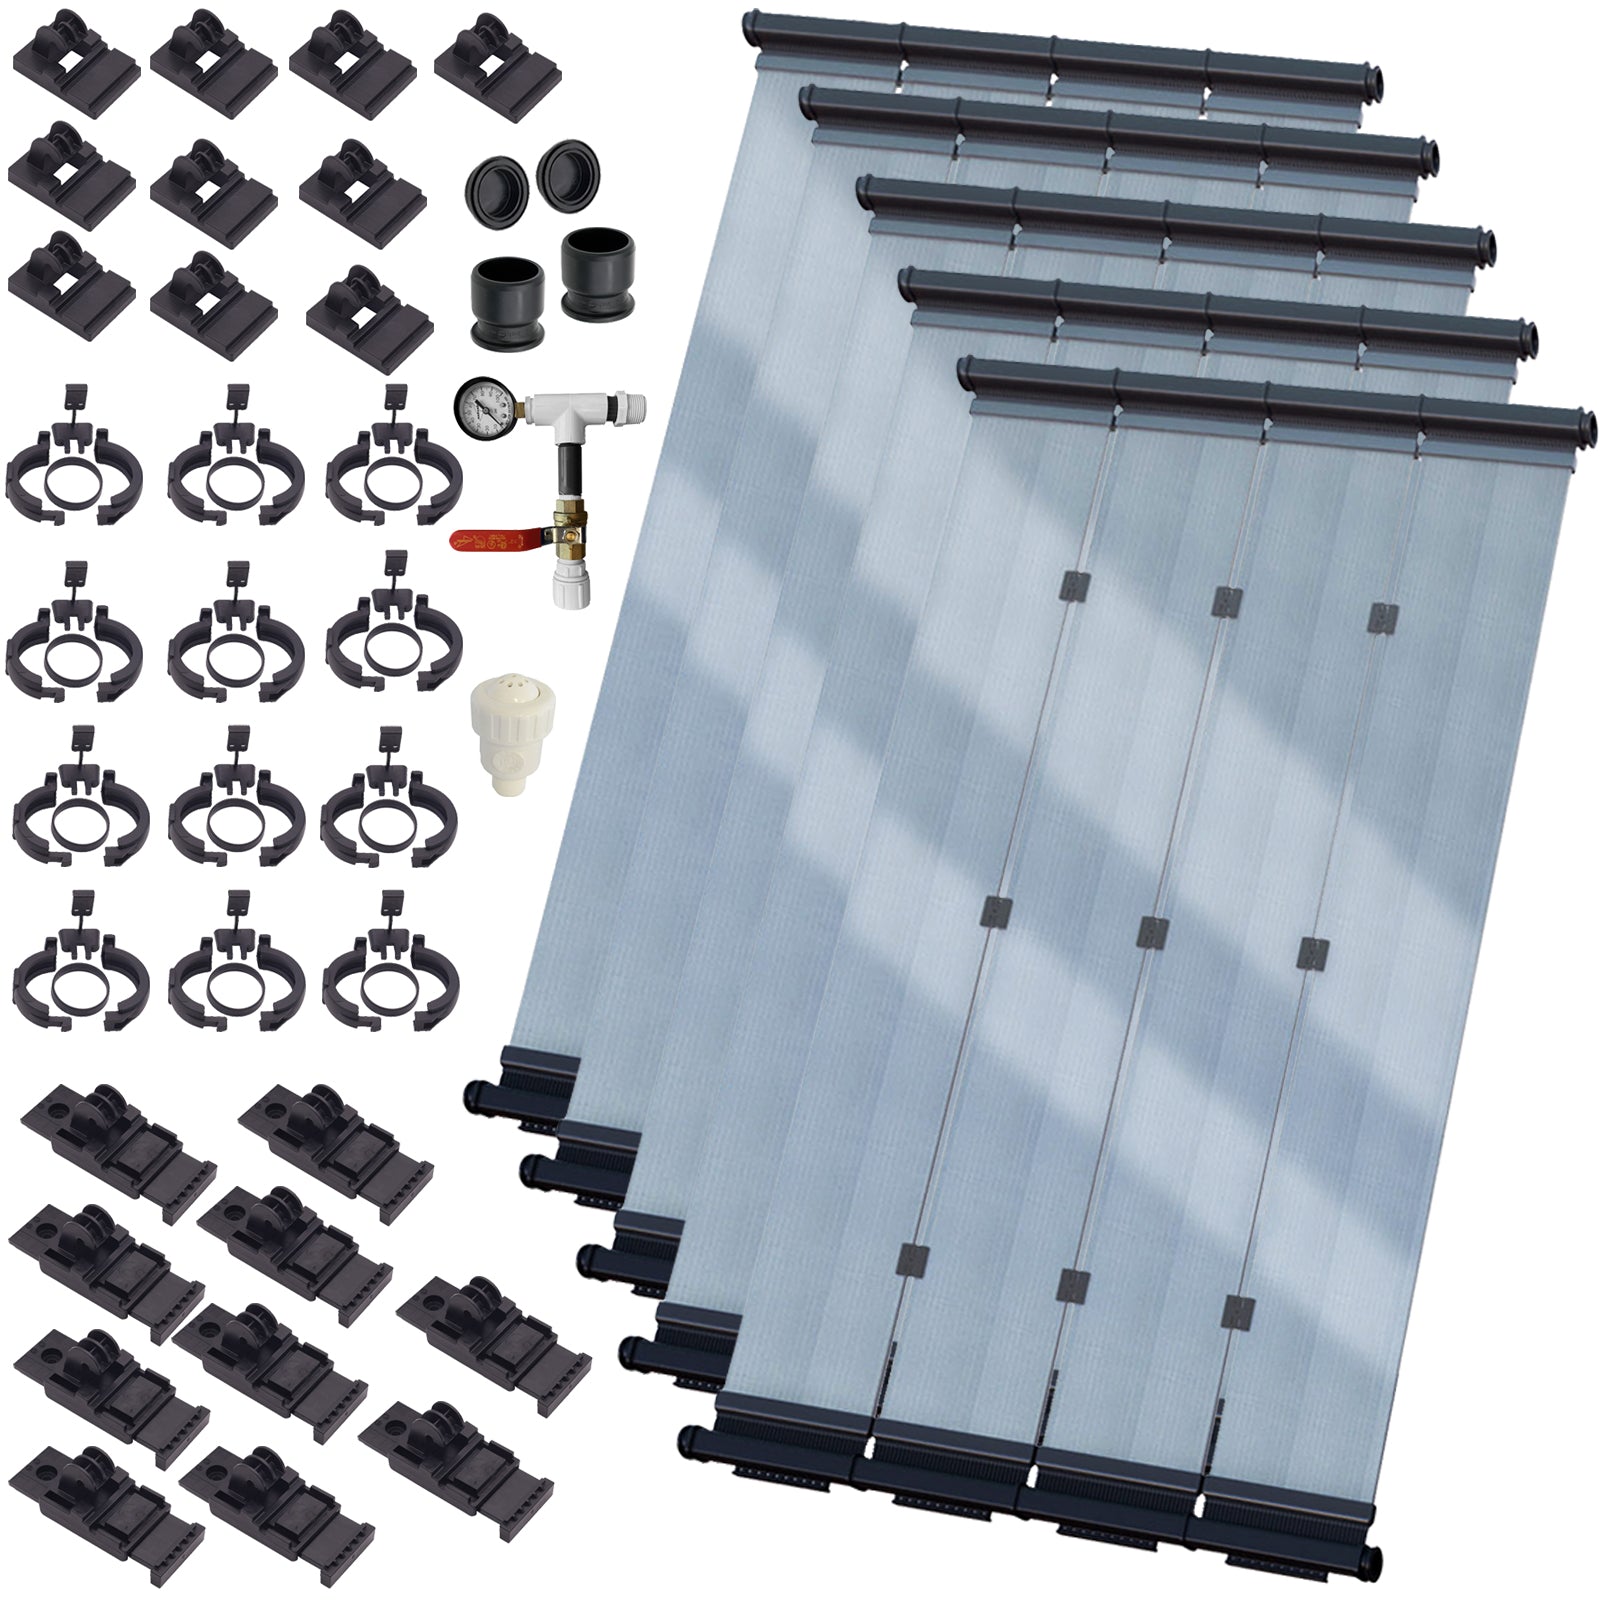 files/SwimLux-Solar-Pool-Heater-5-Panel-DIY-Kit.jpg